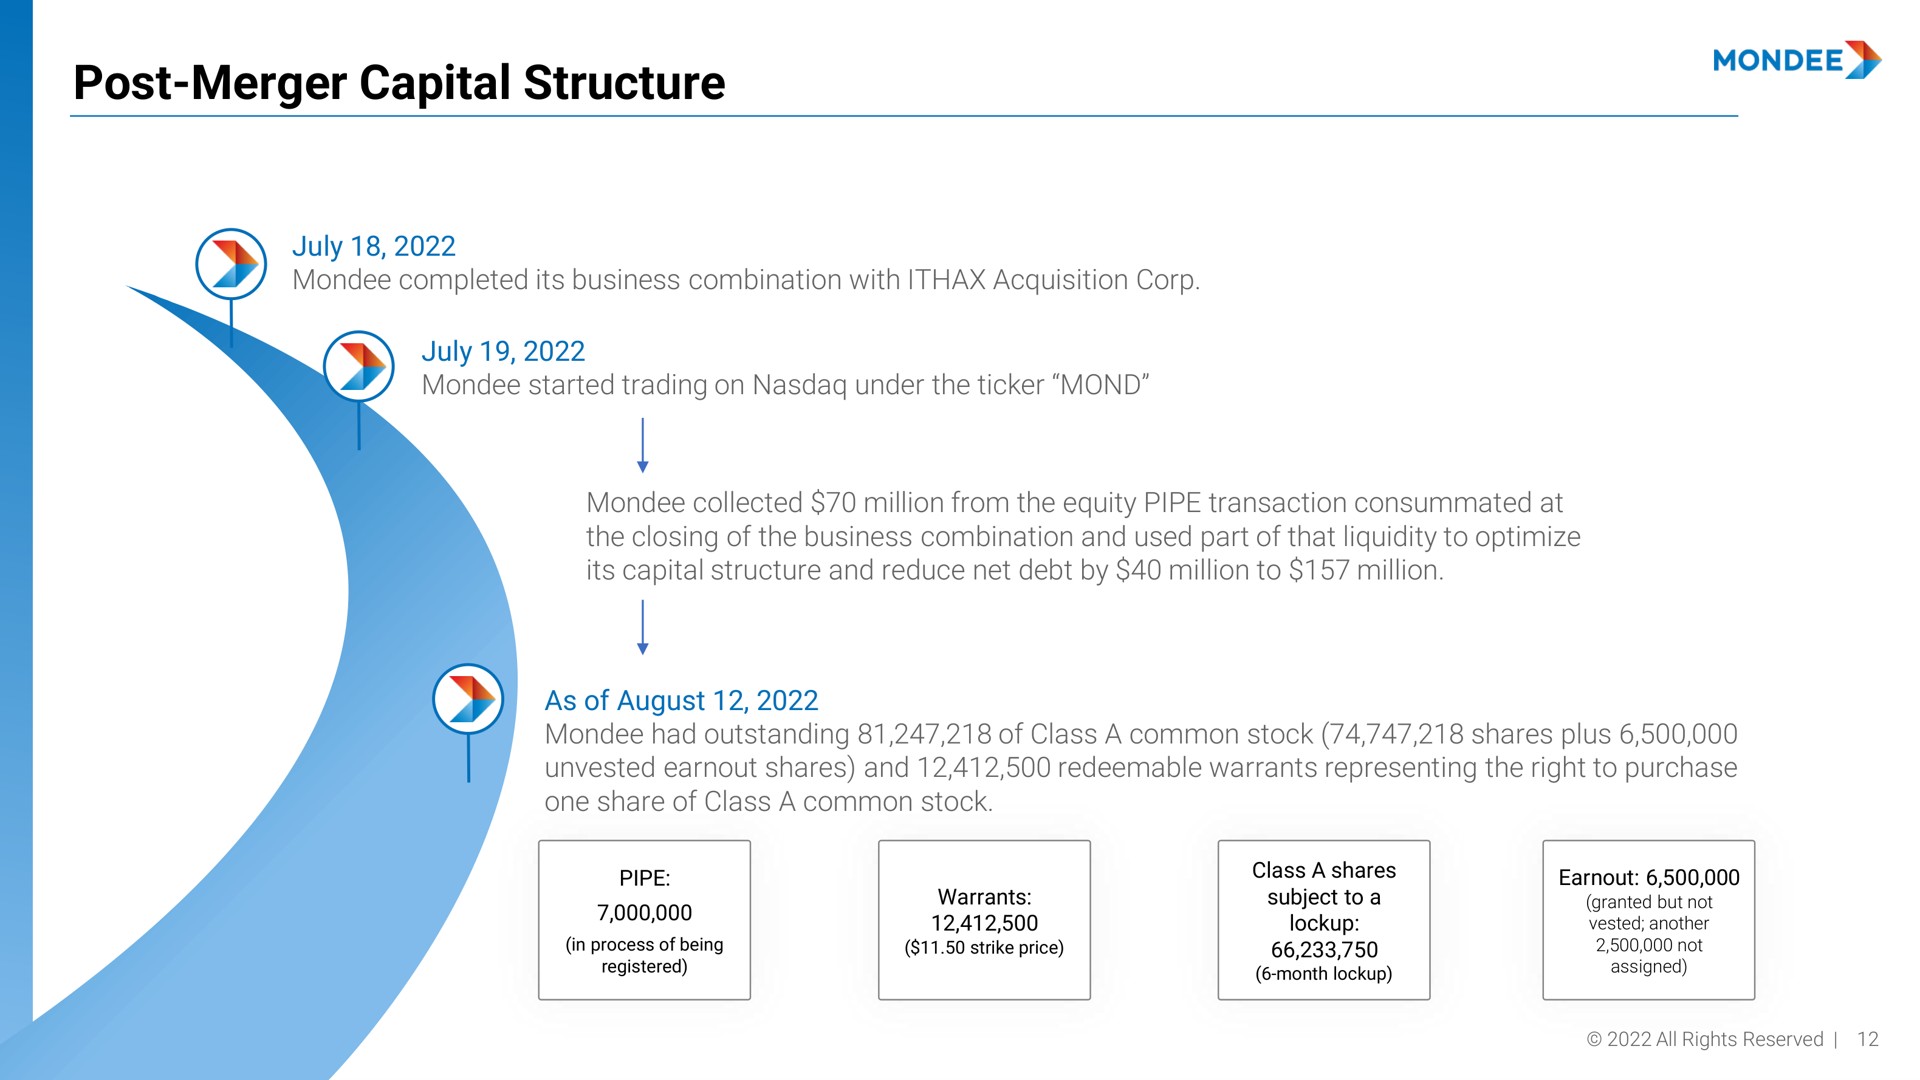 post merger capital structure | Mondee